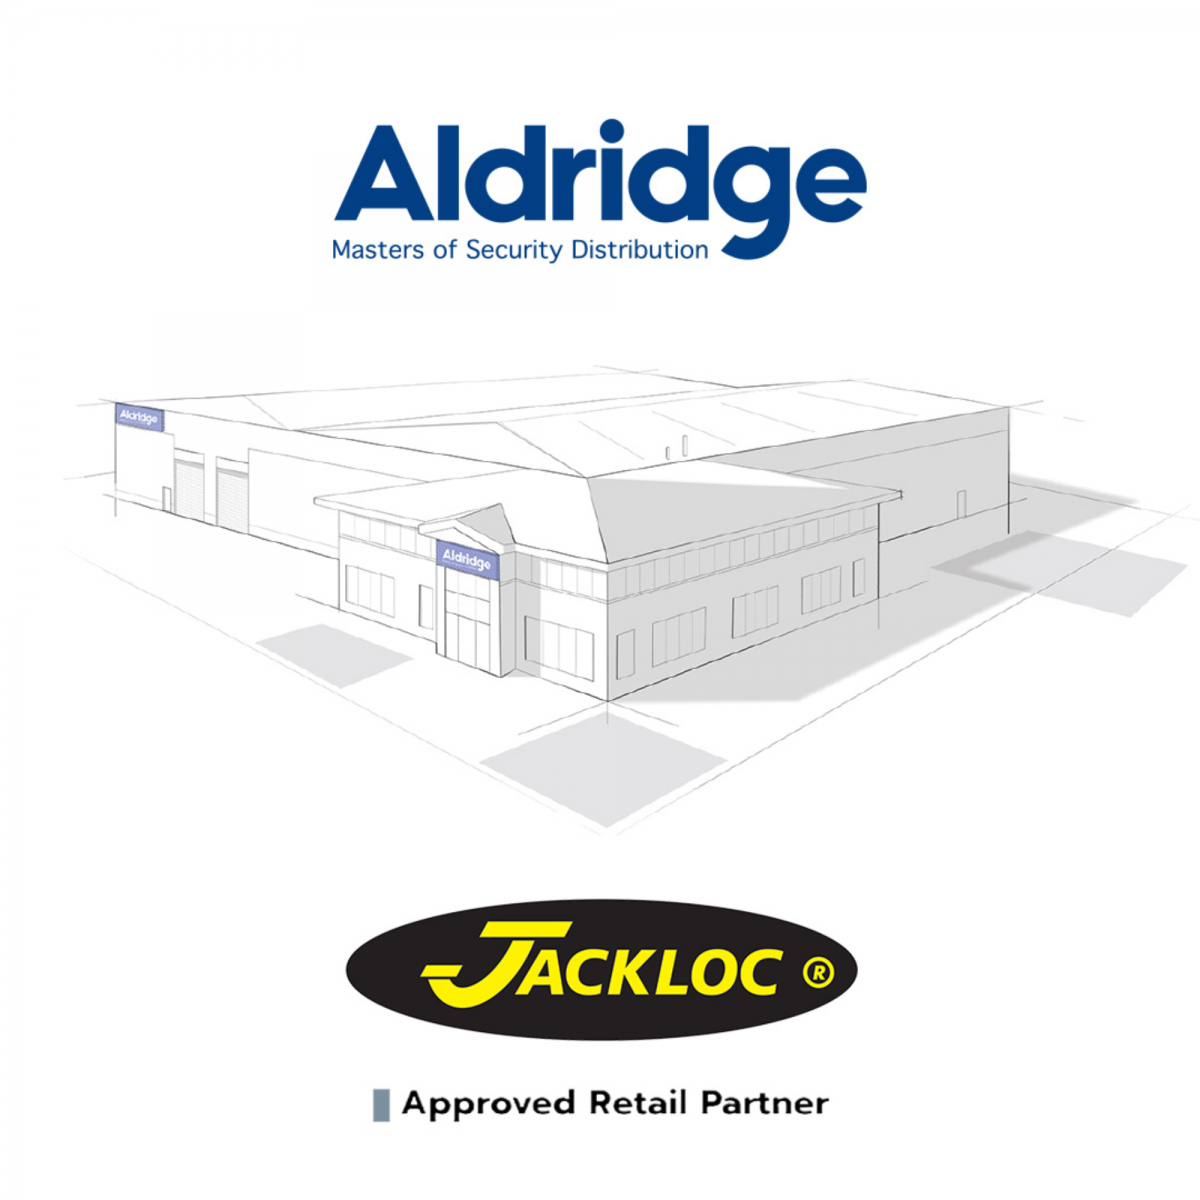 Aldridge Jackloc Approved Installer